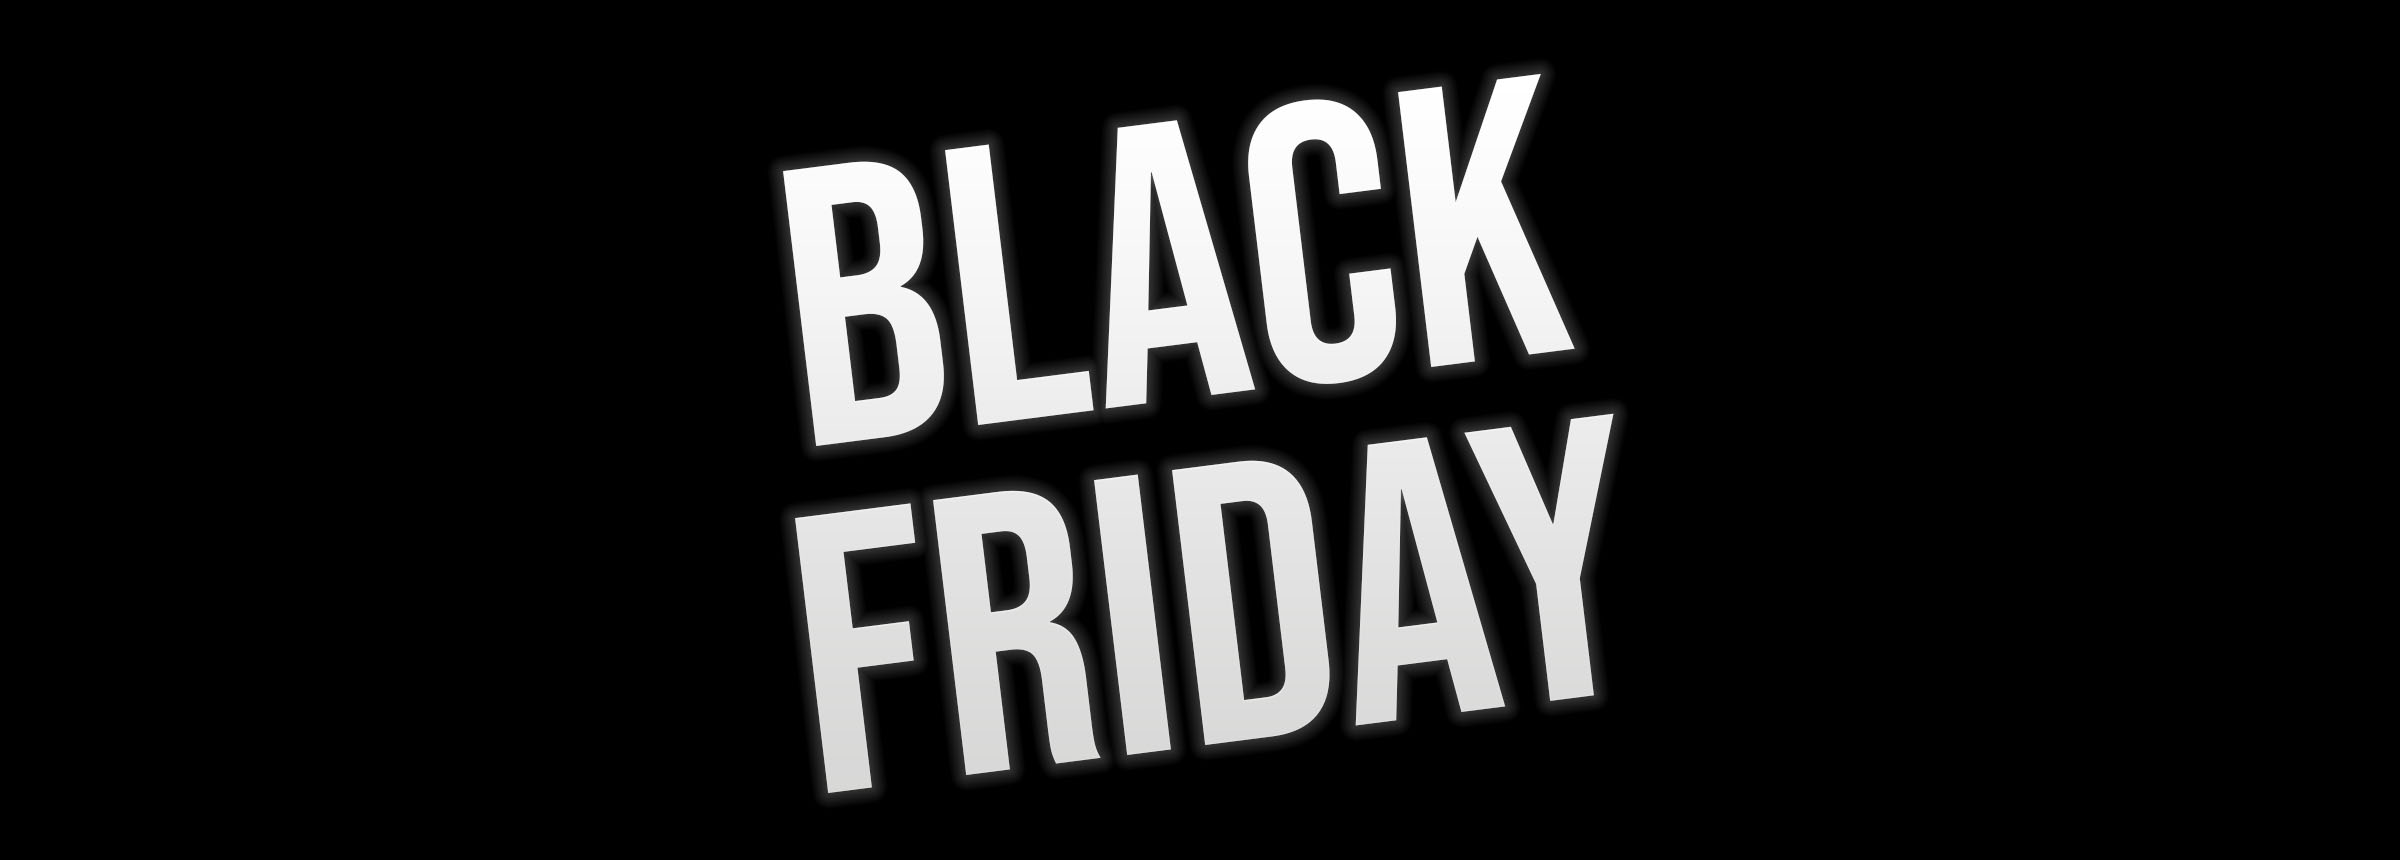 Black Friday Hours & Sales! Holyoke Mall